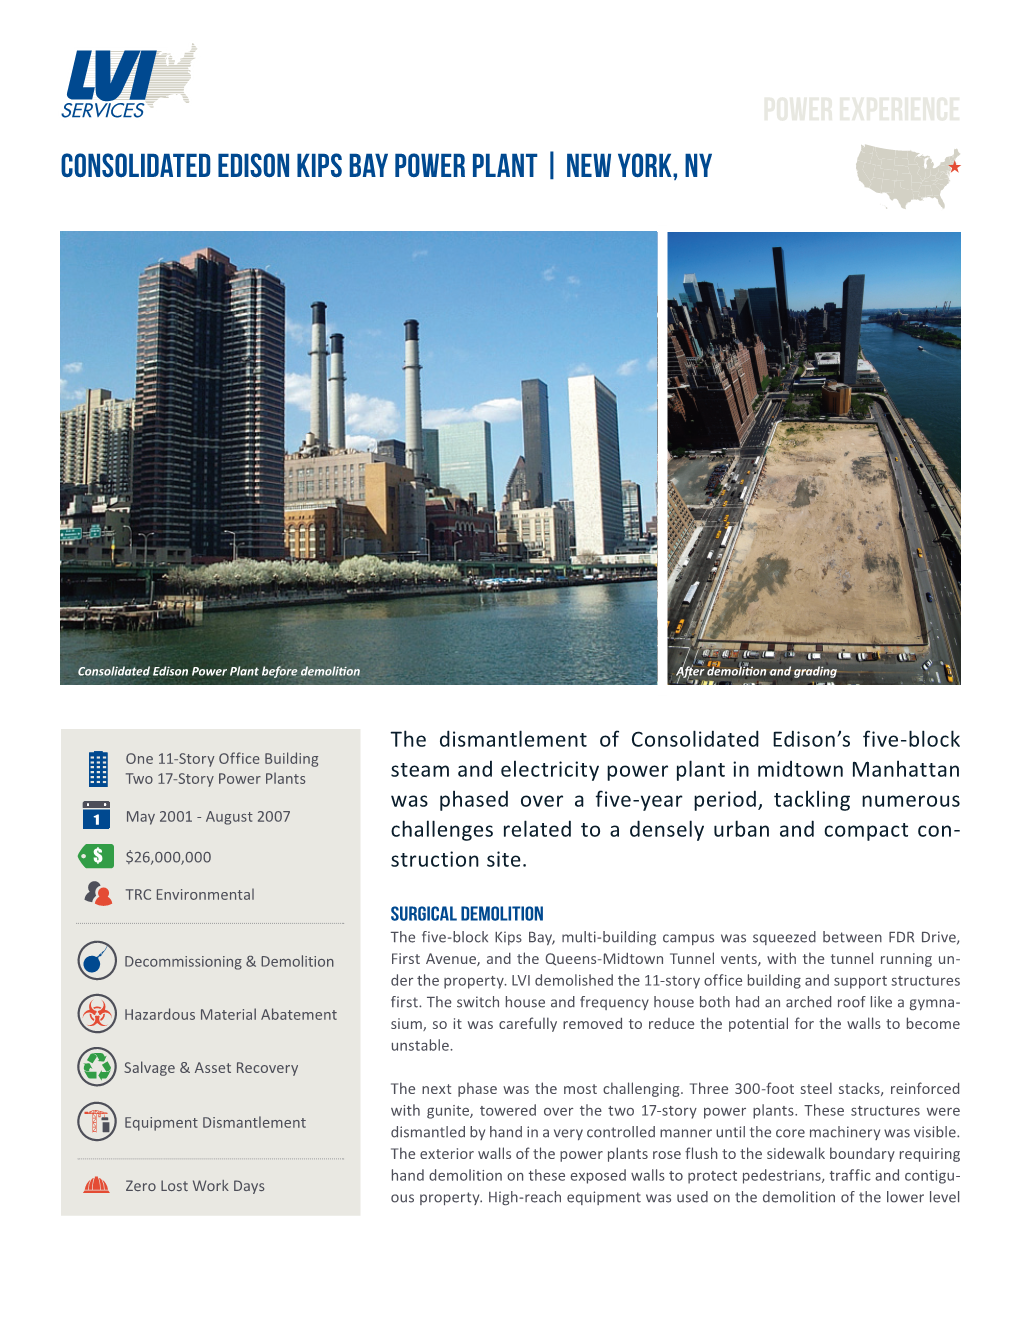 POWER Experience Consolidated Edison KIPS BAY Power Plant | New York, NY